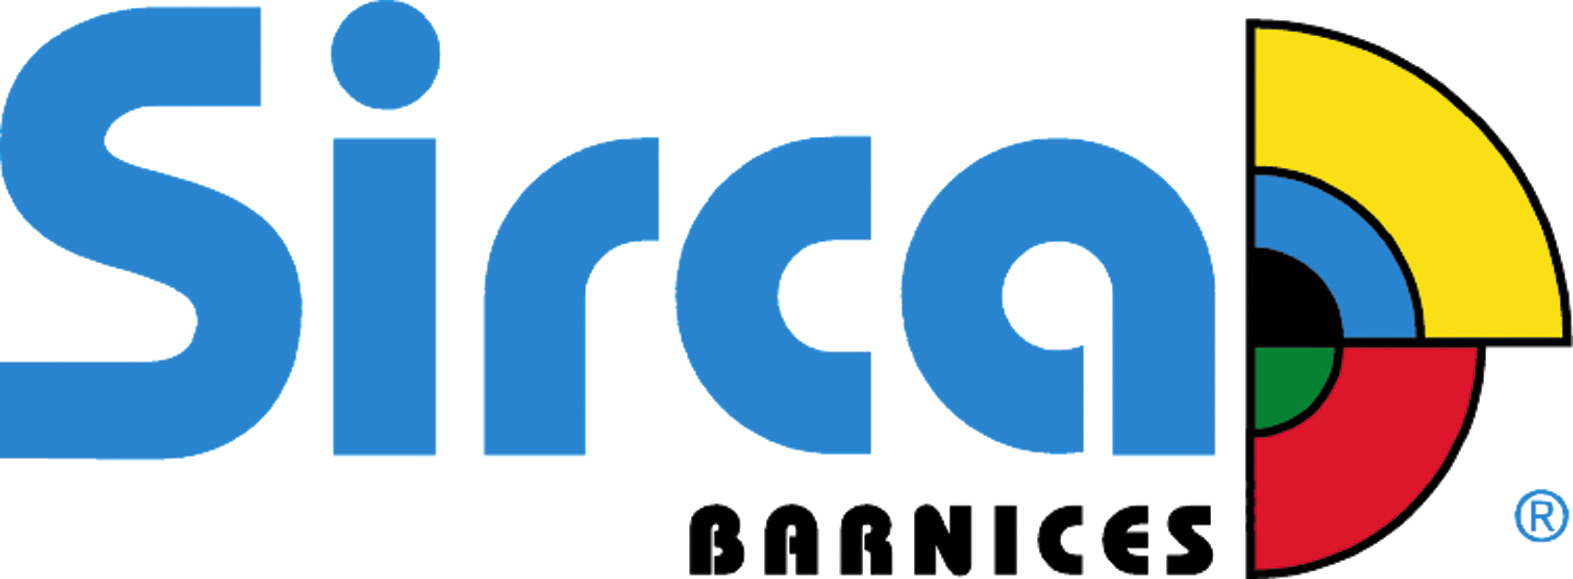 LOGO BARNICES SIRCA - Barnices Sirca